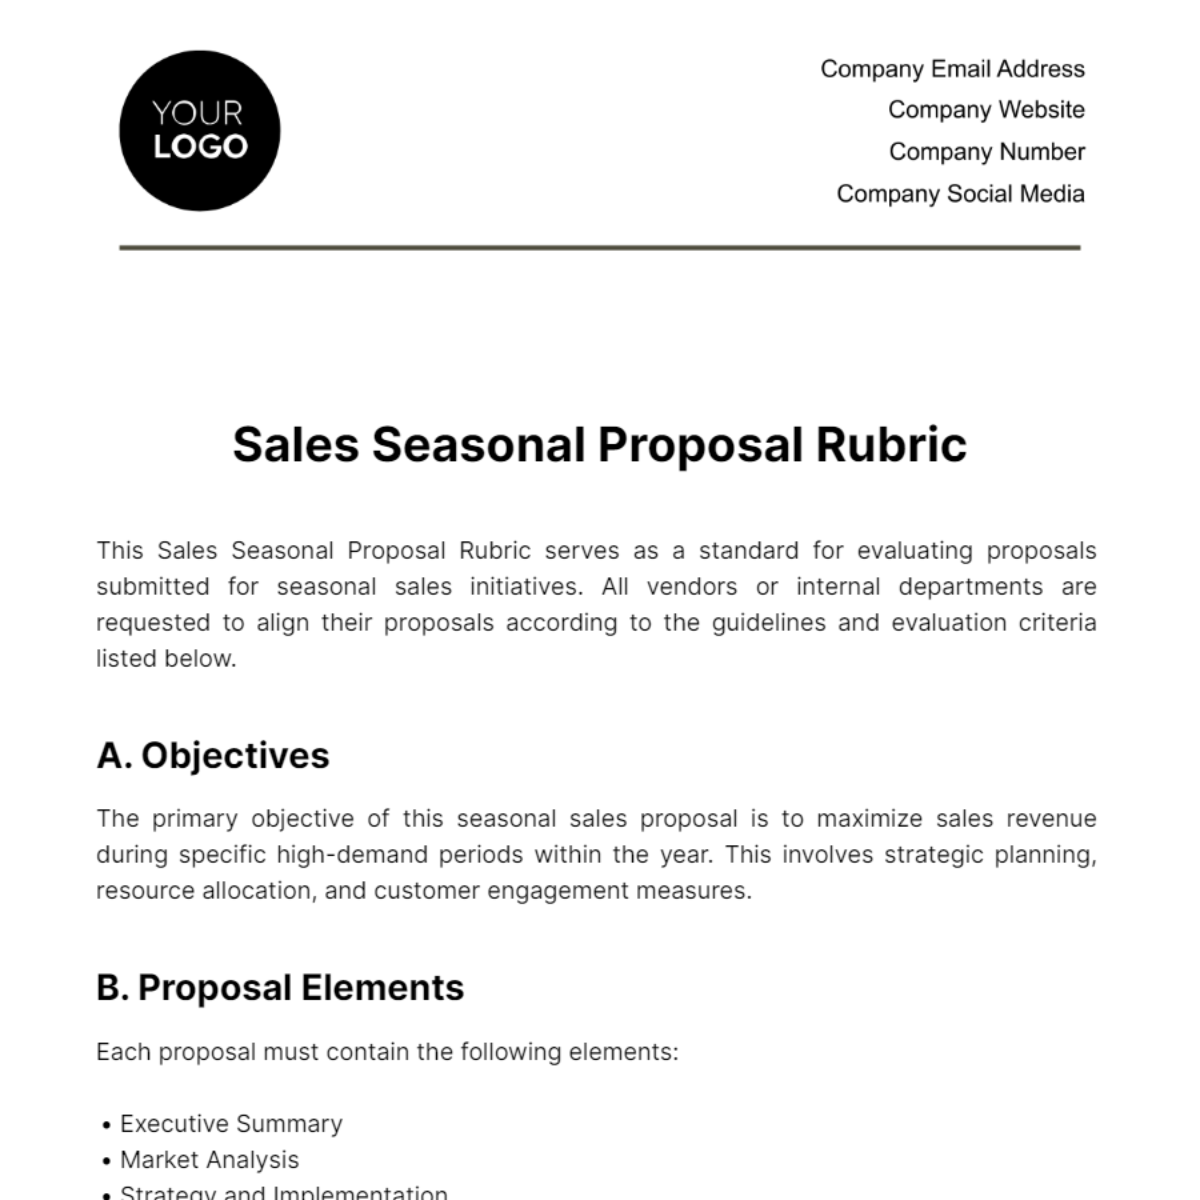 Sales Seasonal Proposal Rubric Template